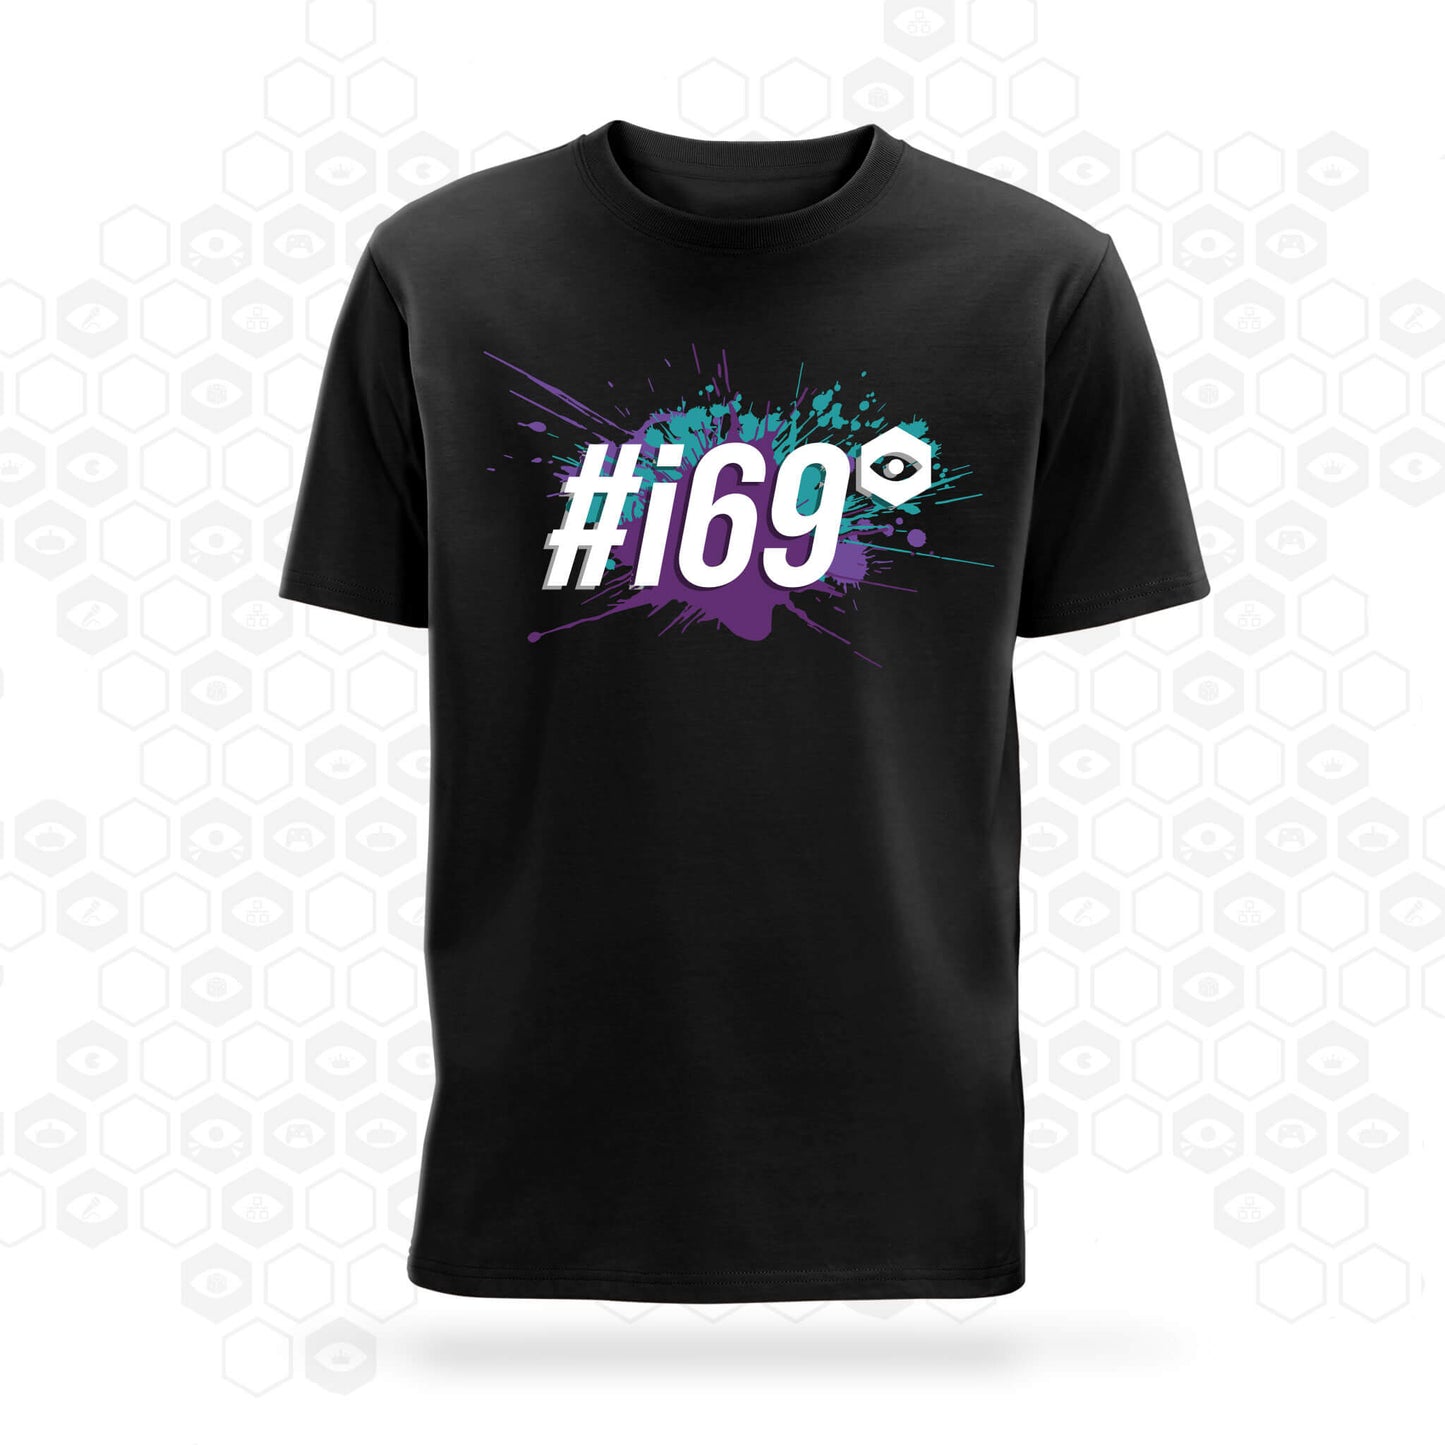 i69 Splash Black T-Shirt | Insomnia Gaming Festival